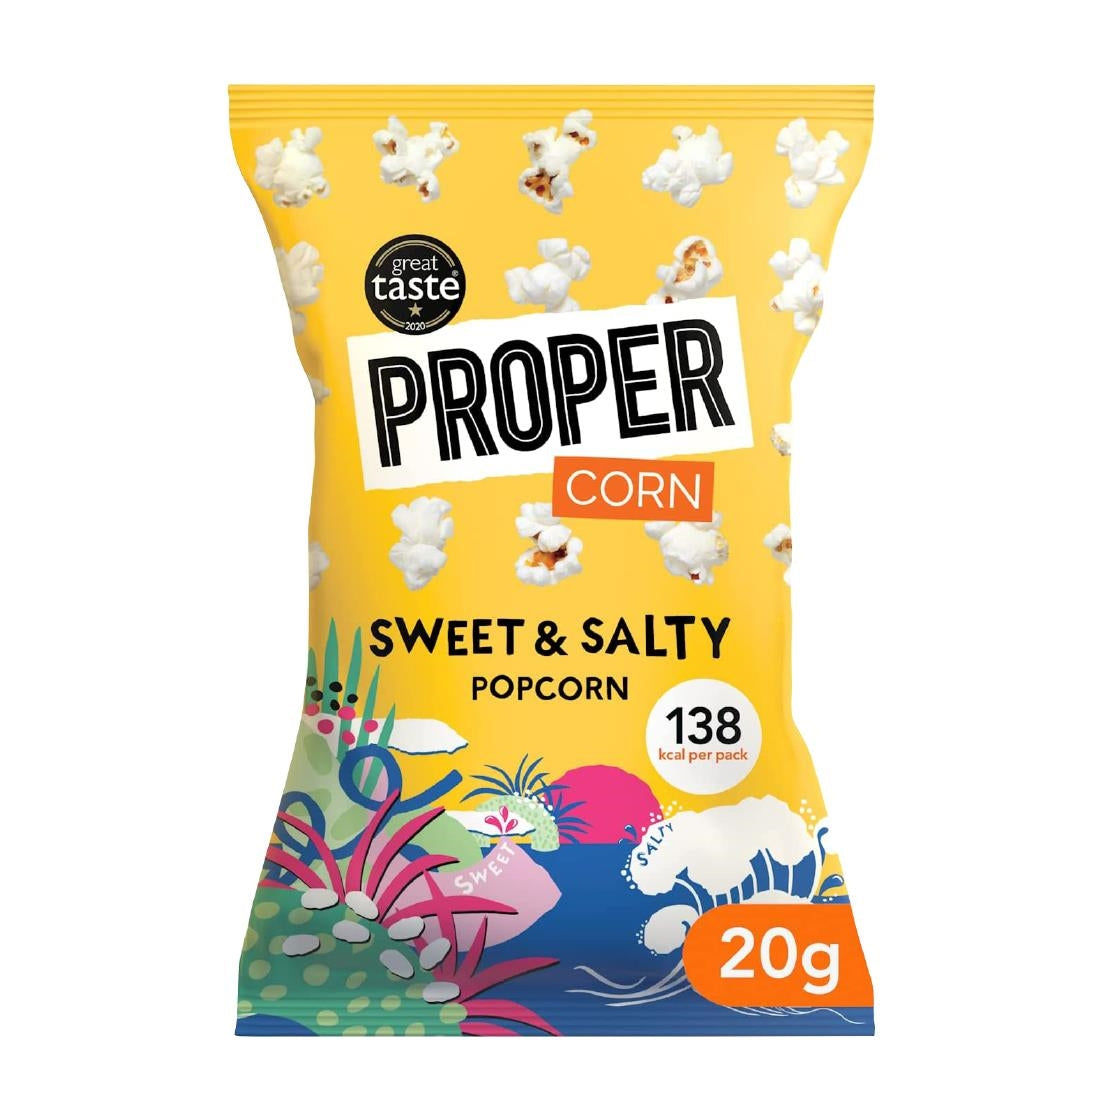 CZ726 Proper Corn Popcorn Sweet and Salty 24x20g JD Catering Equipment Solutions Ltd